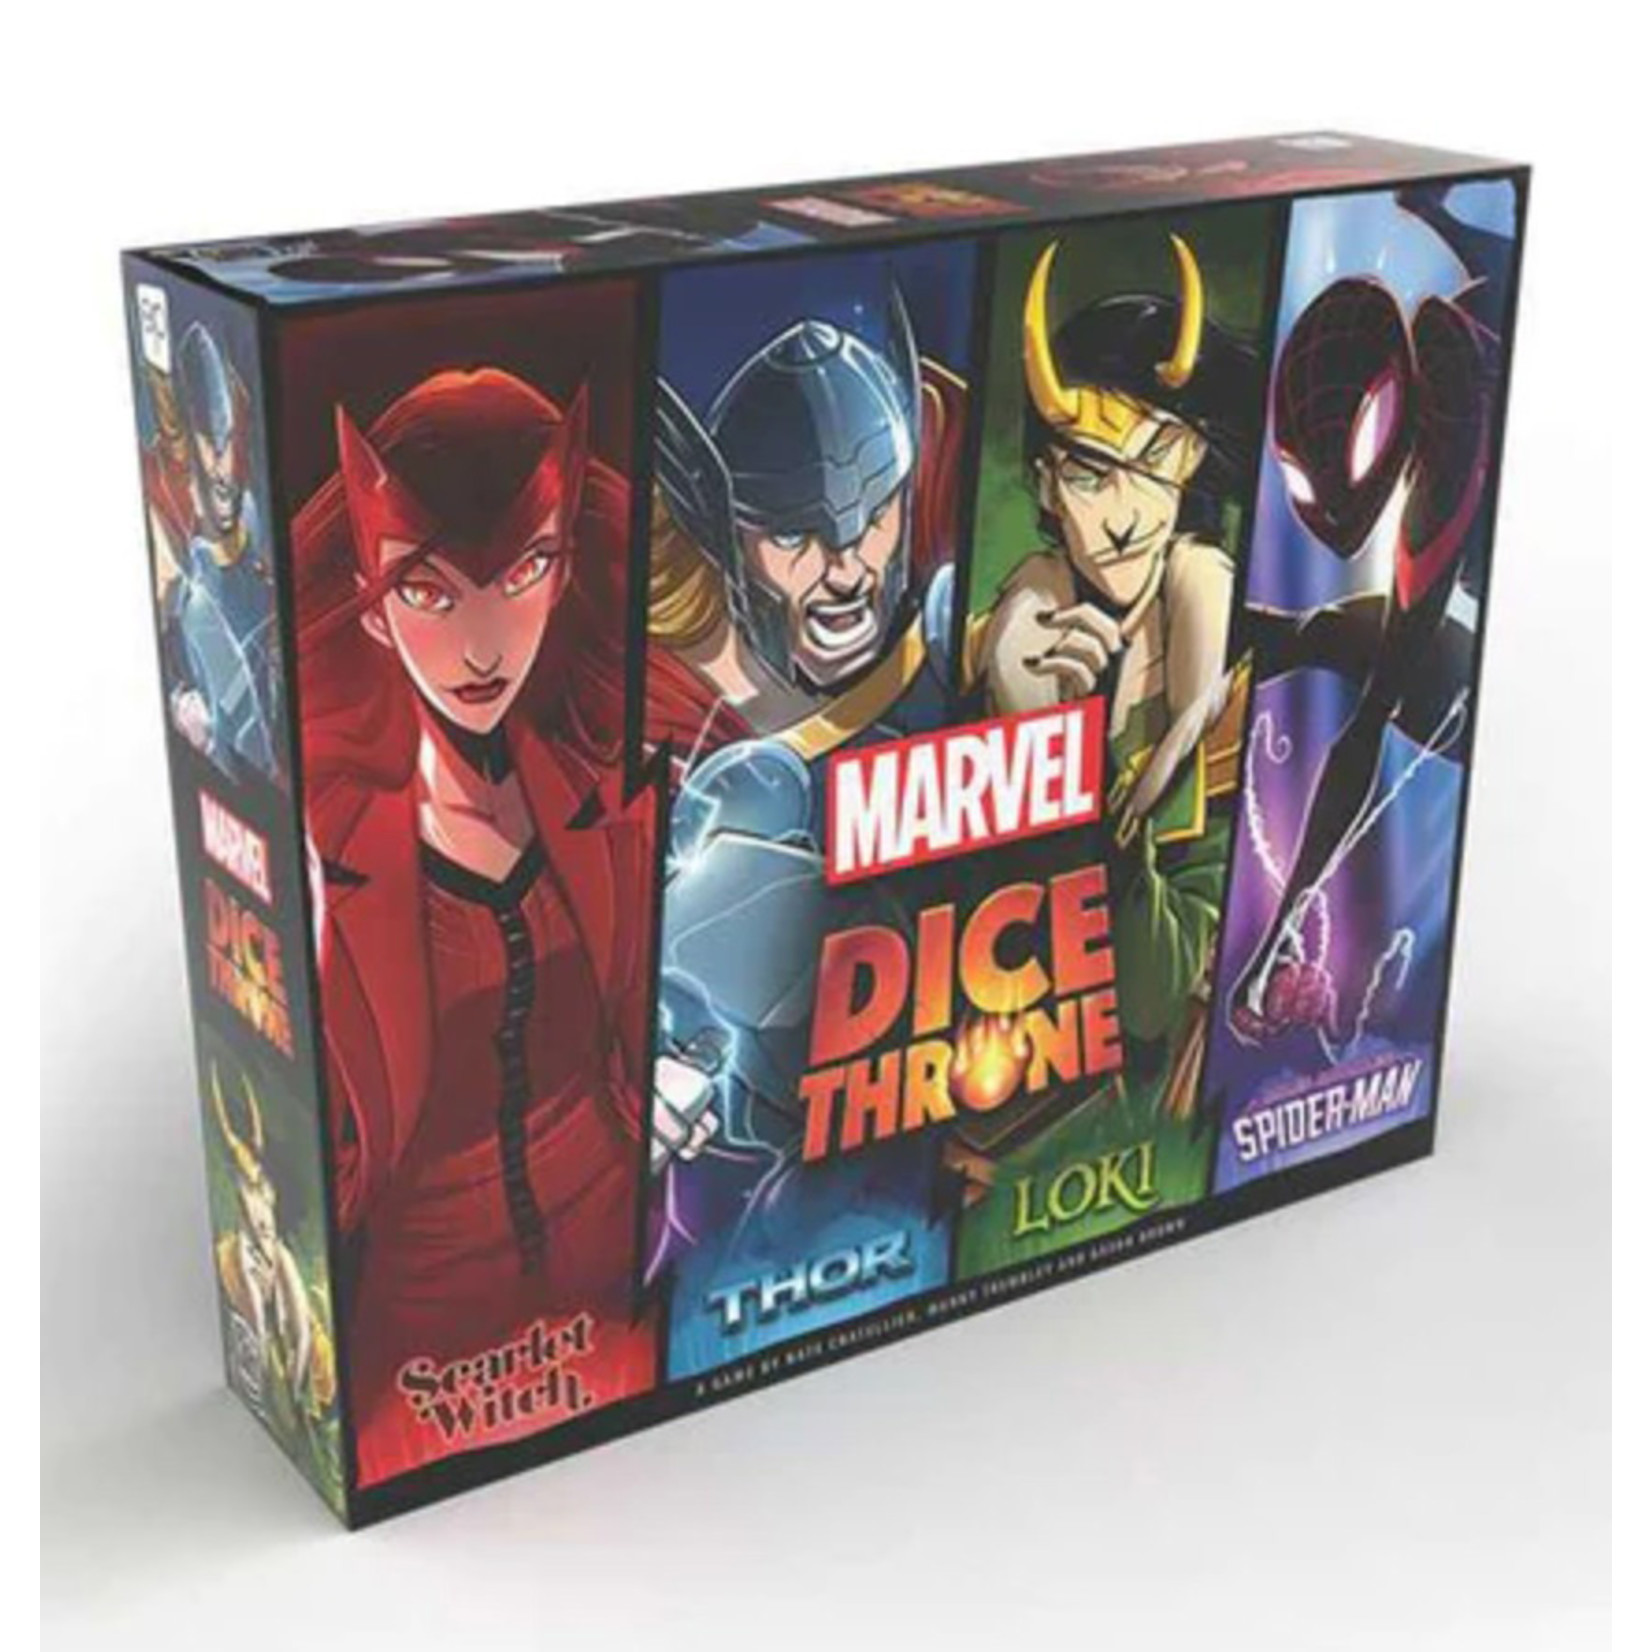 Marvel Dice Throne: 4-Hero Box (Scarlet Witch, Thor, Loki, and Spider-Man)